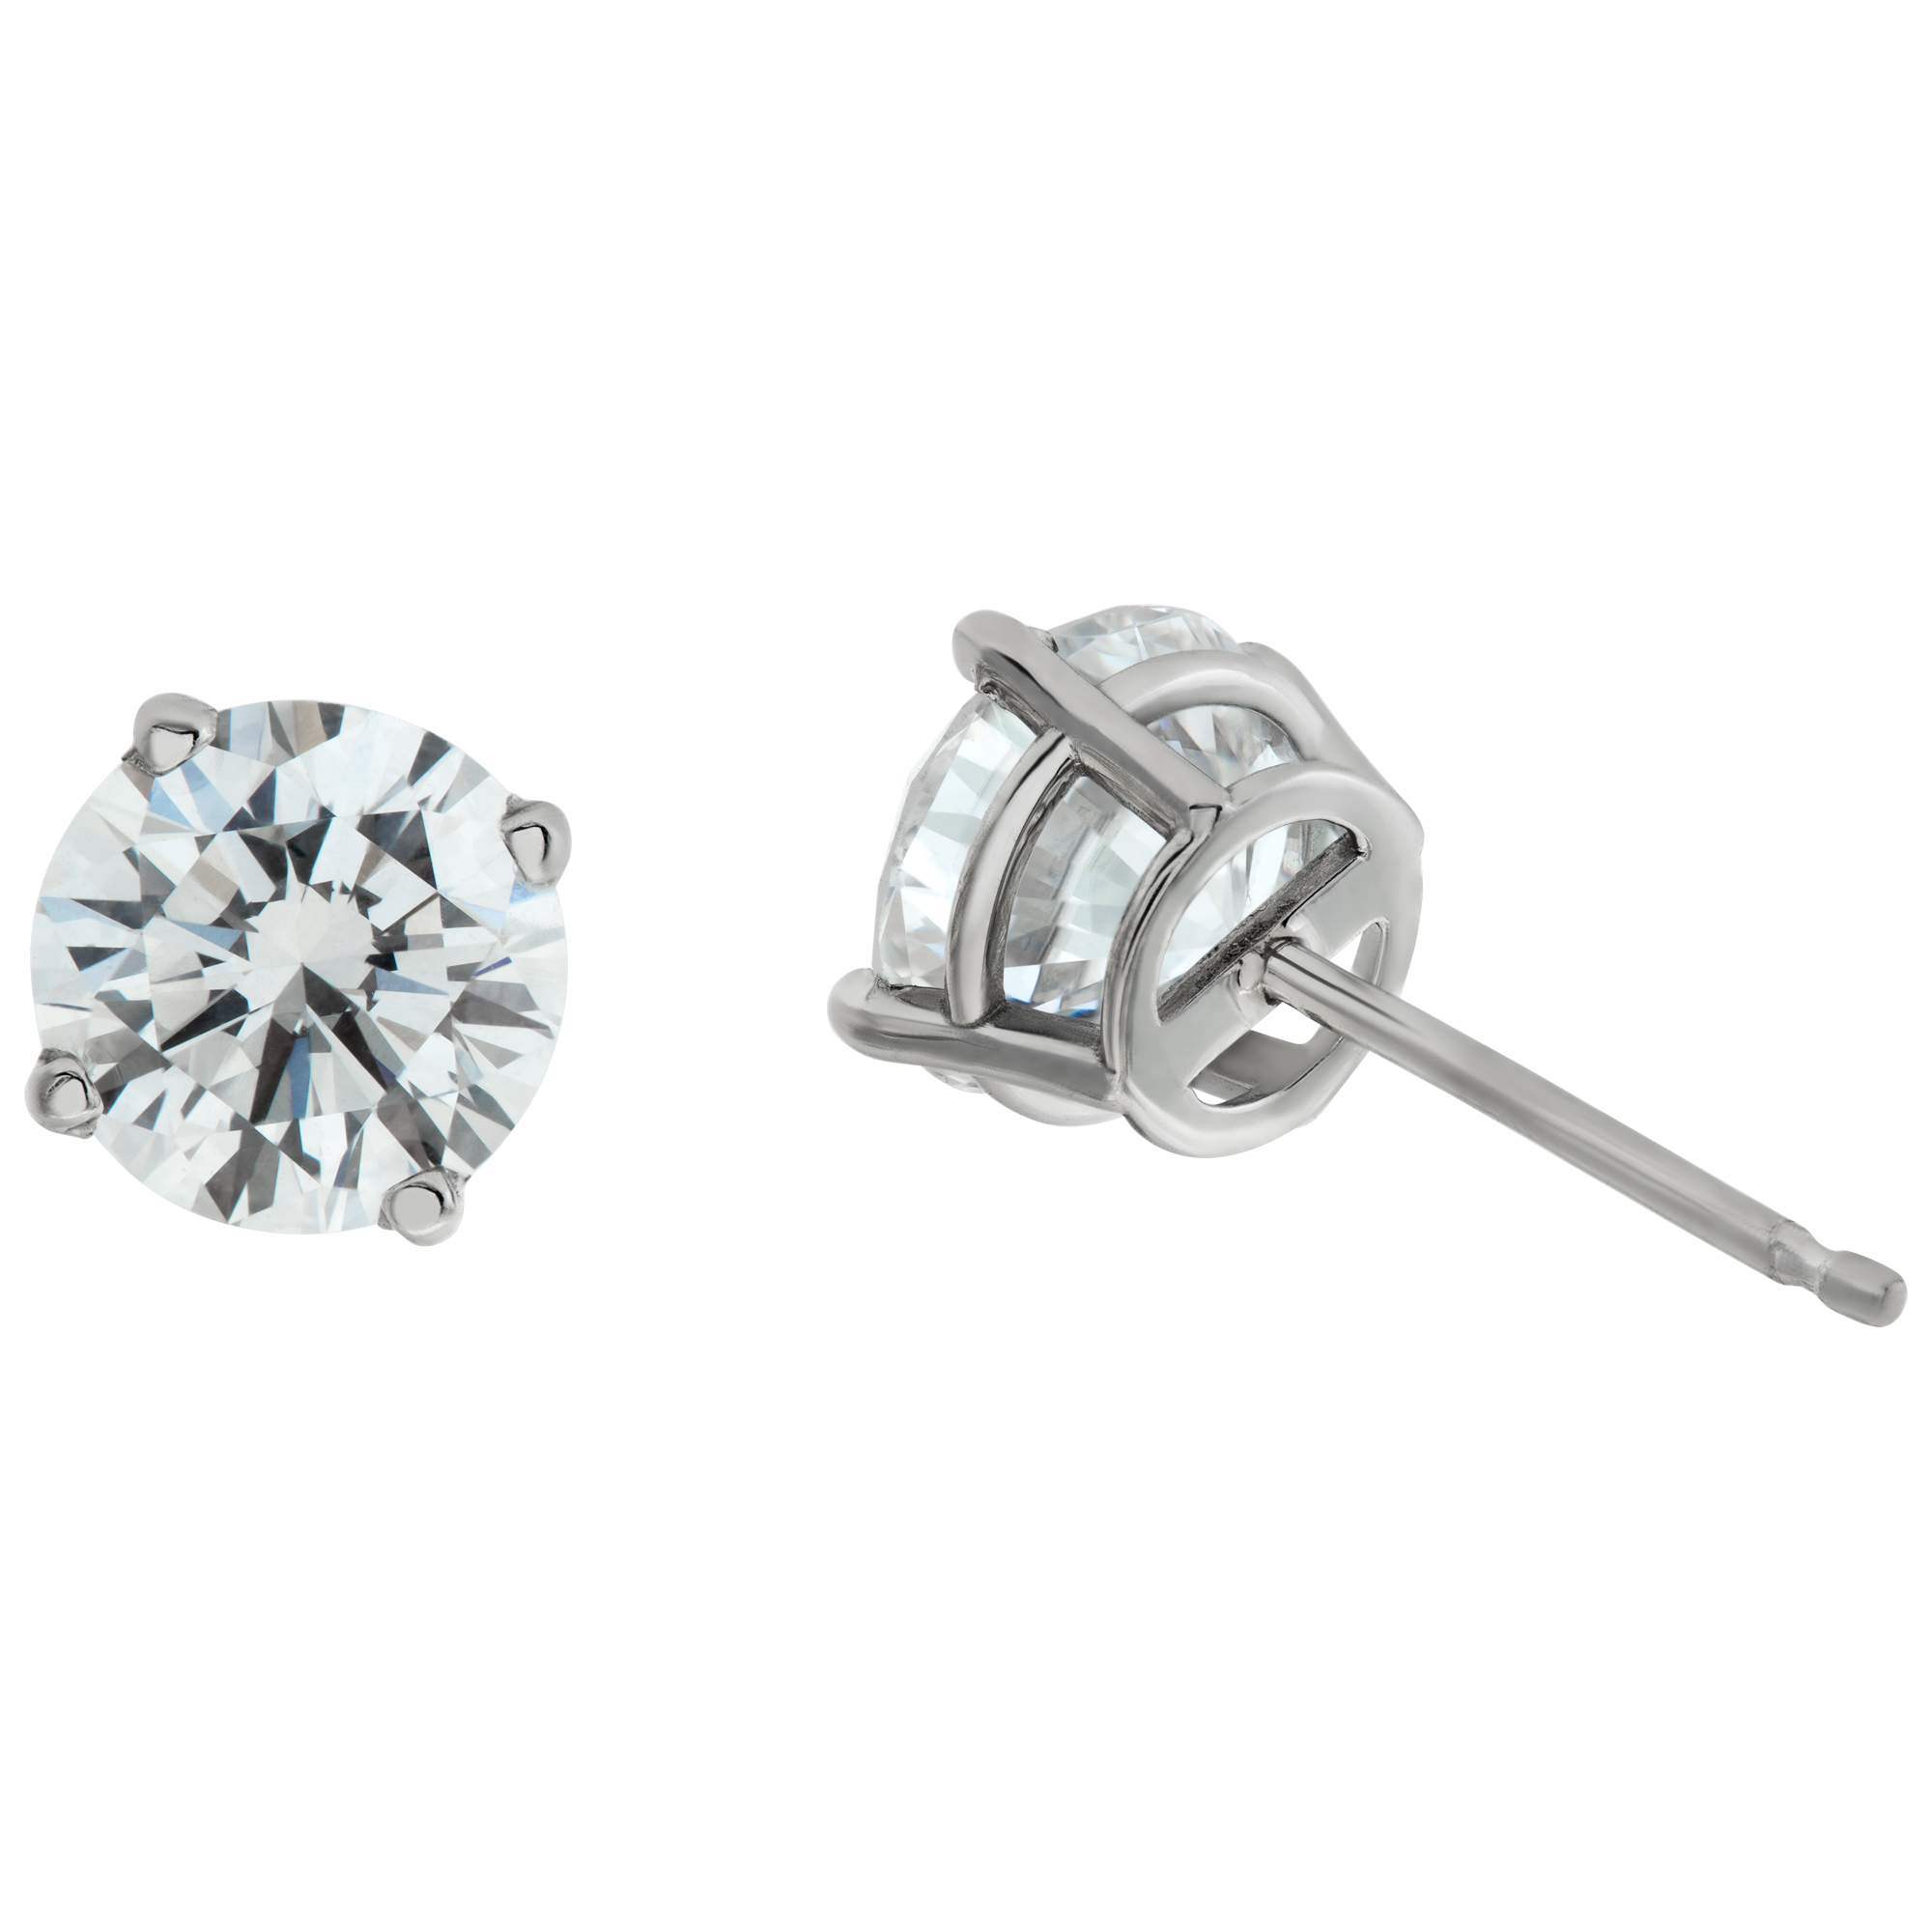 GIA certified round brilliant cut diamond studs 1.02 carat (E color, VS2 clarity) and 1.01 carat (E color, VS1 clarity image 3